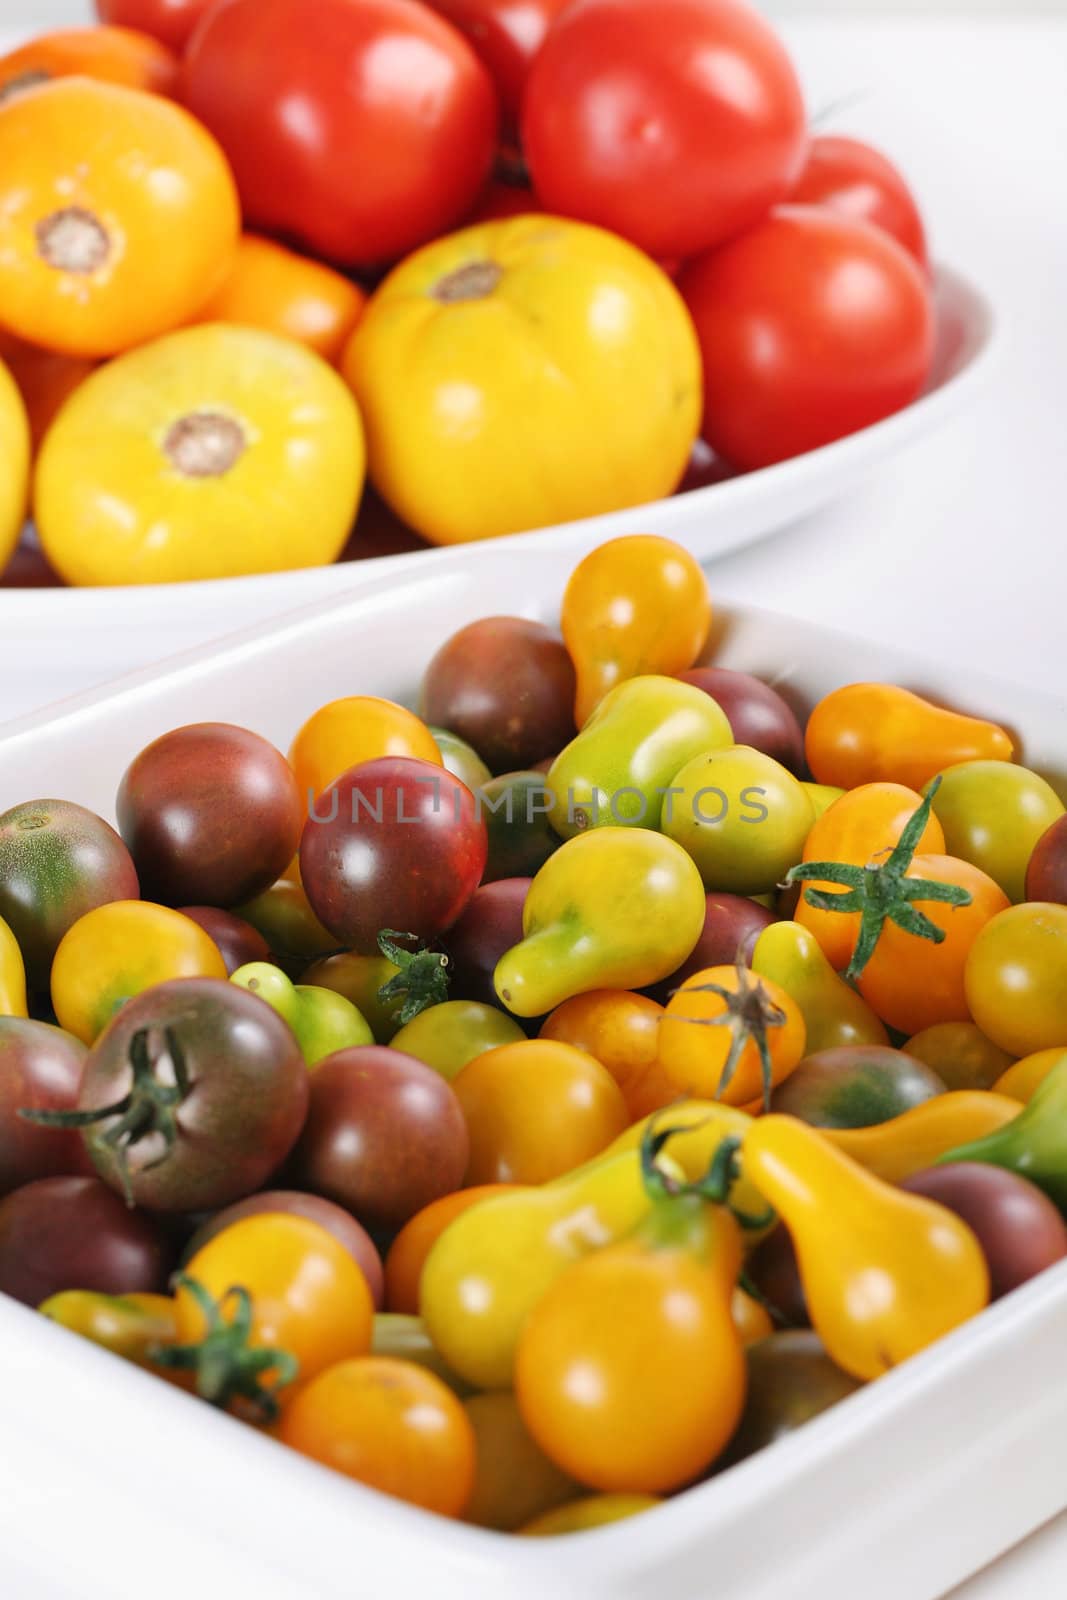 variety of organic heirloom tomatoes by creativestock